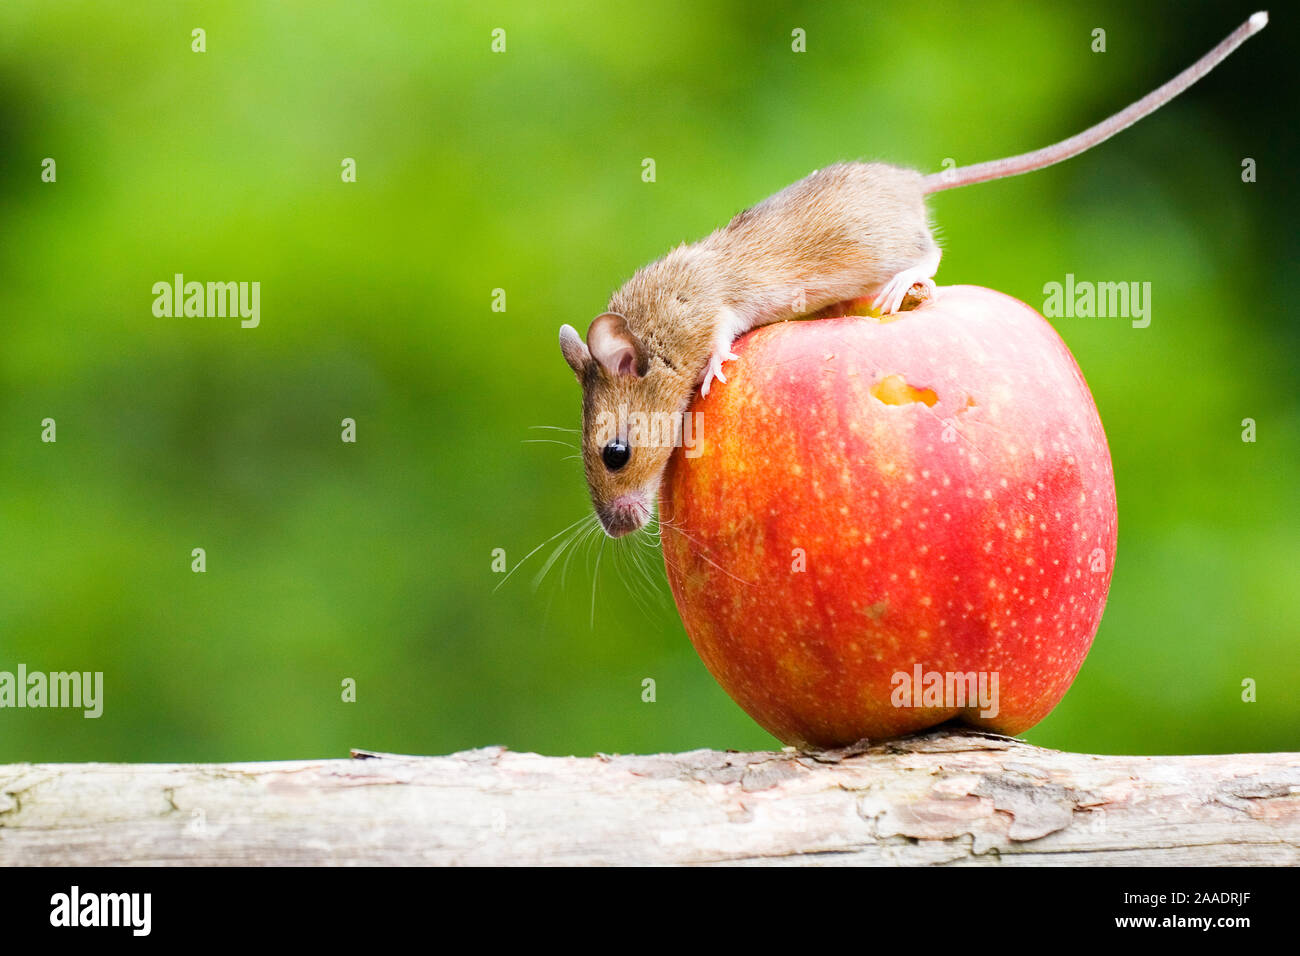 Maus auf Apfel, captive Stock Photo